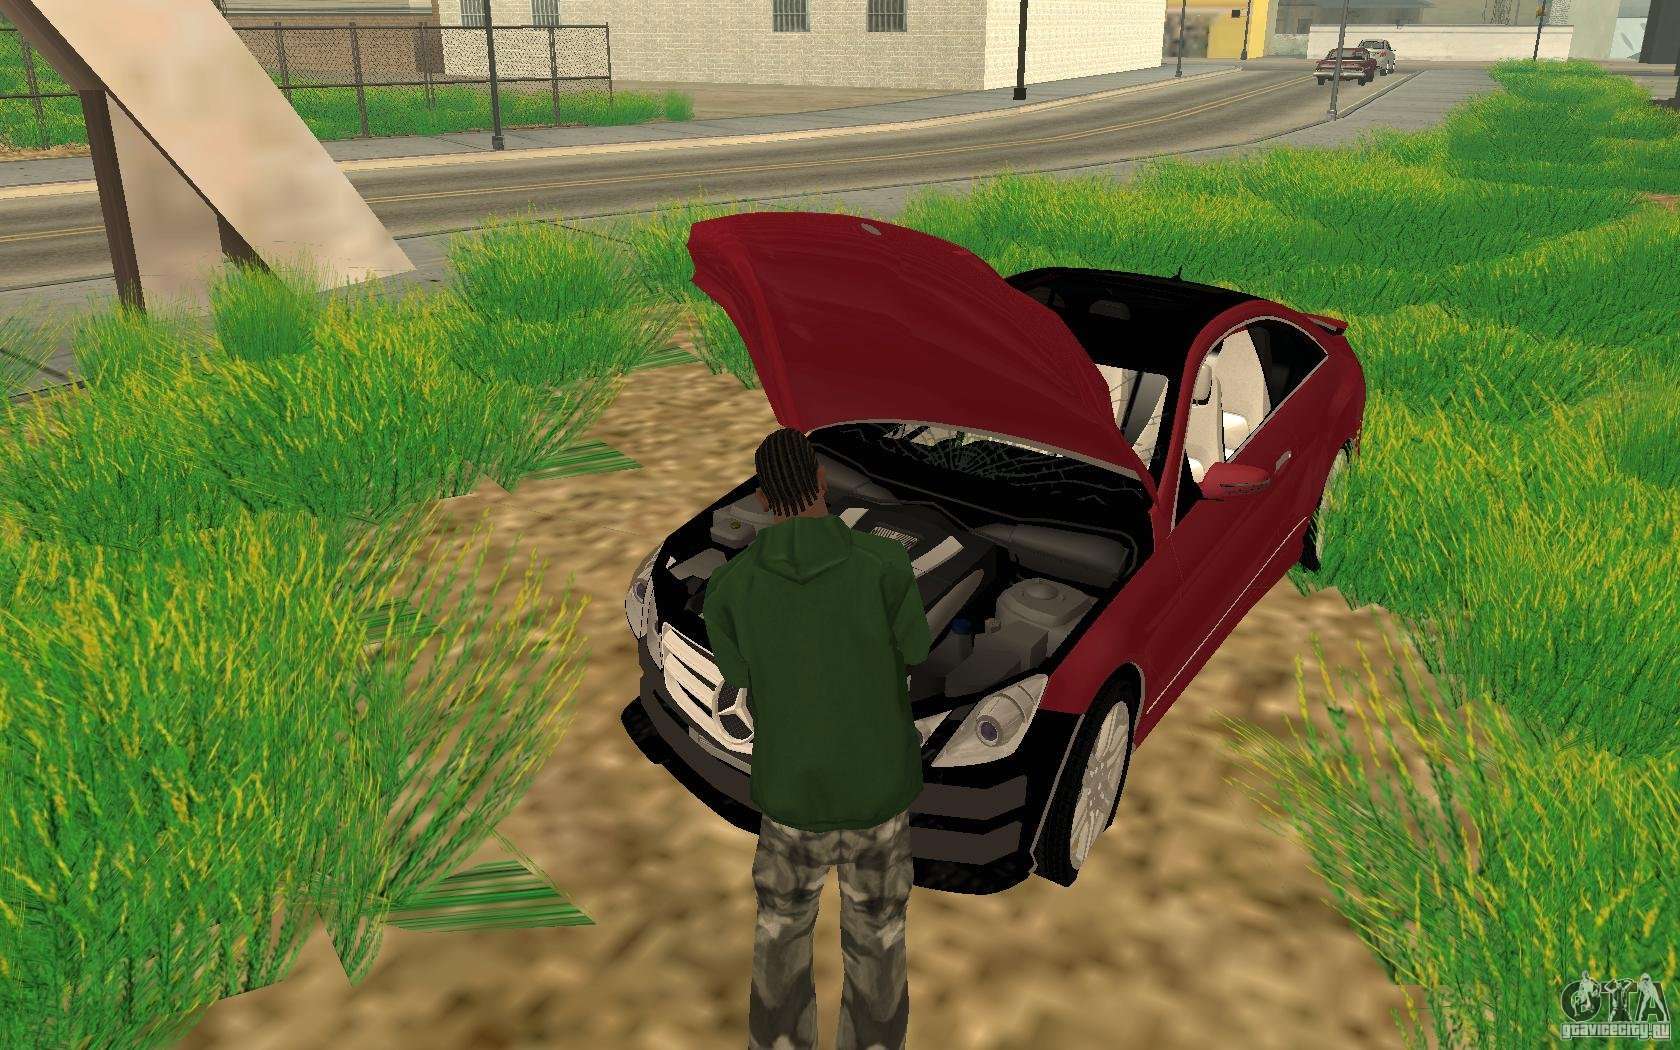 CLEO mod: CJ pode reparar o carro para GTA San Andreas